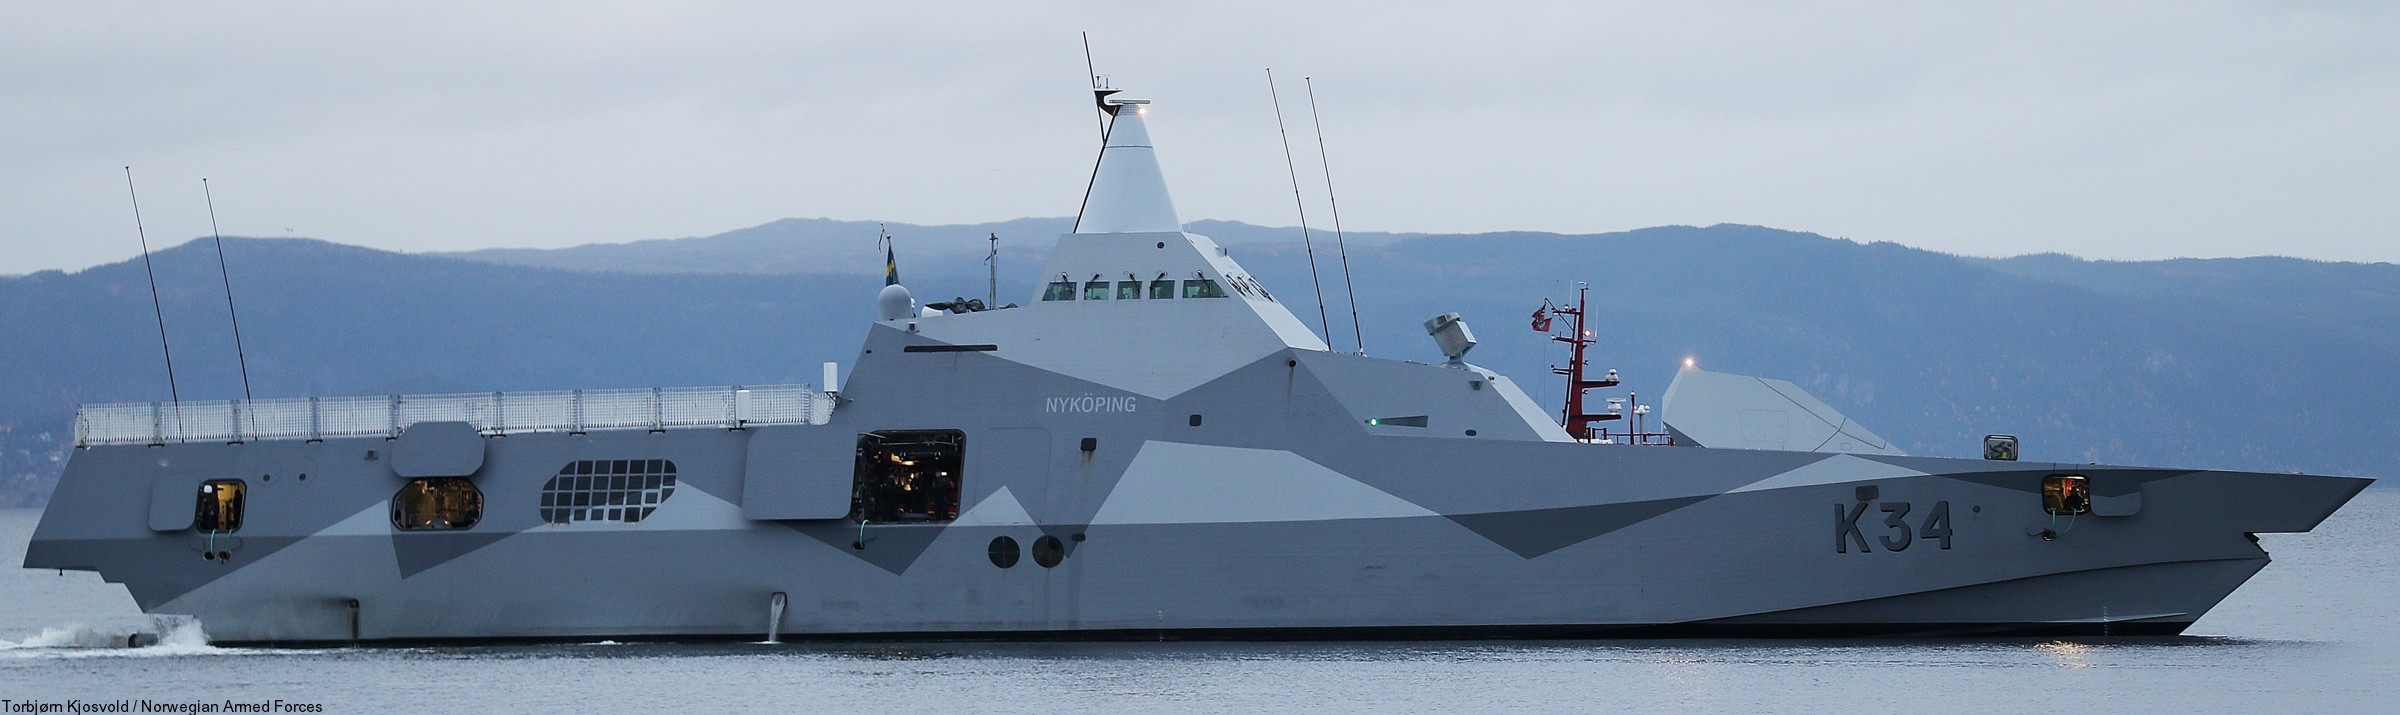 k34 hswms hms nykoping visby class corvette royal swedish navy svenska marinen 03